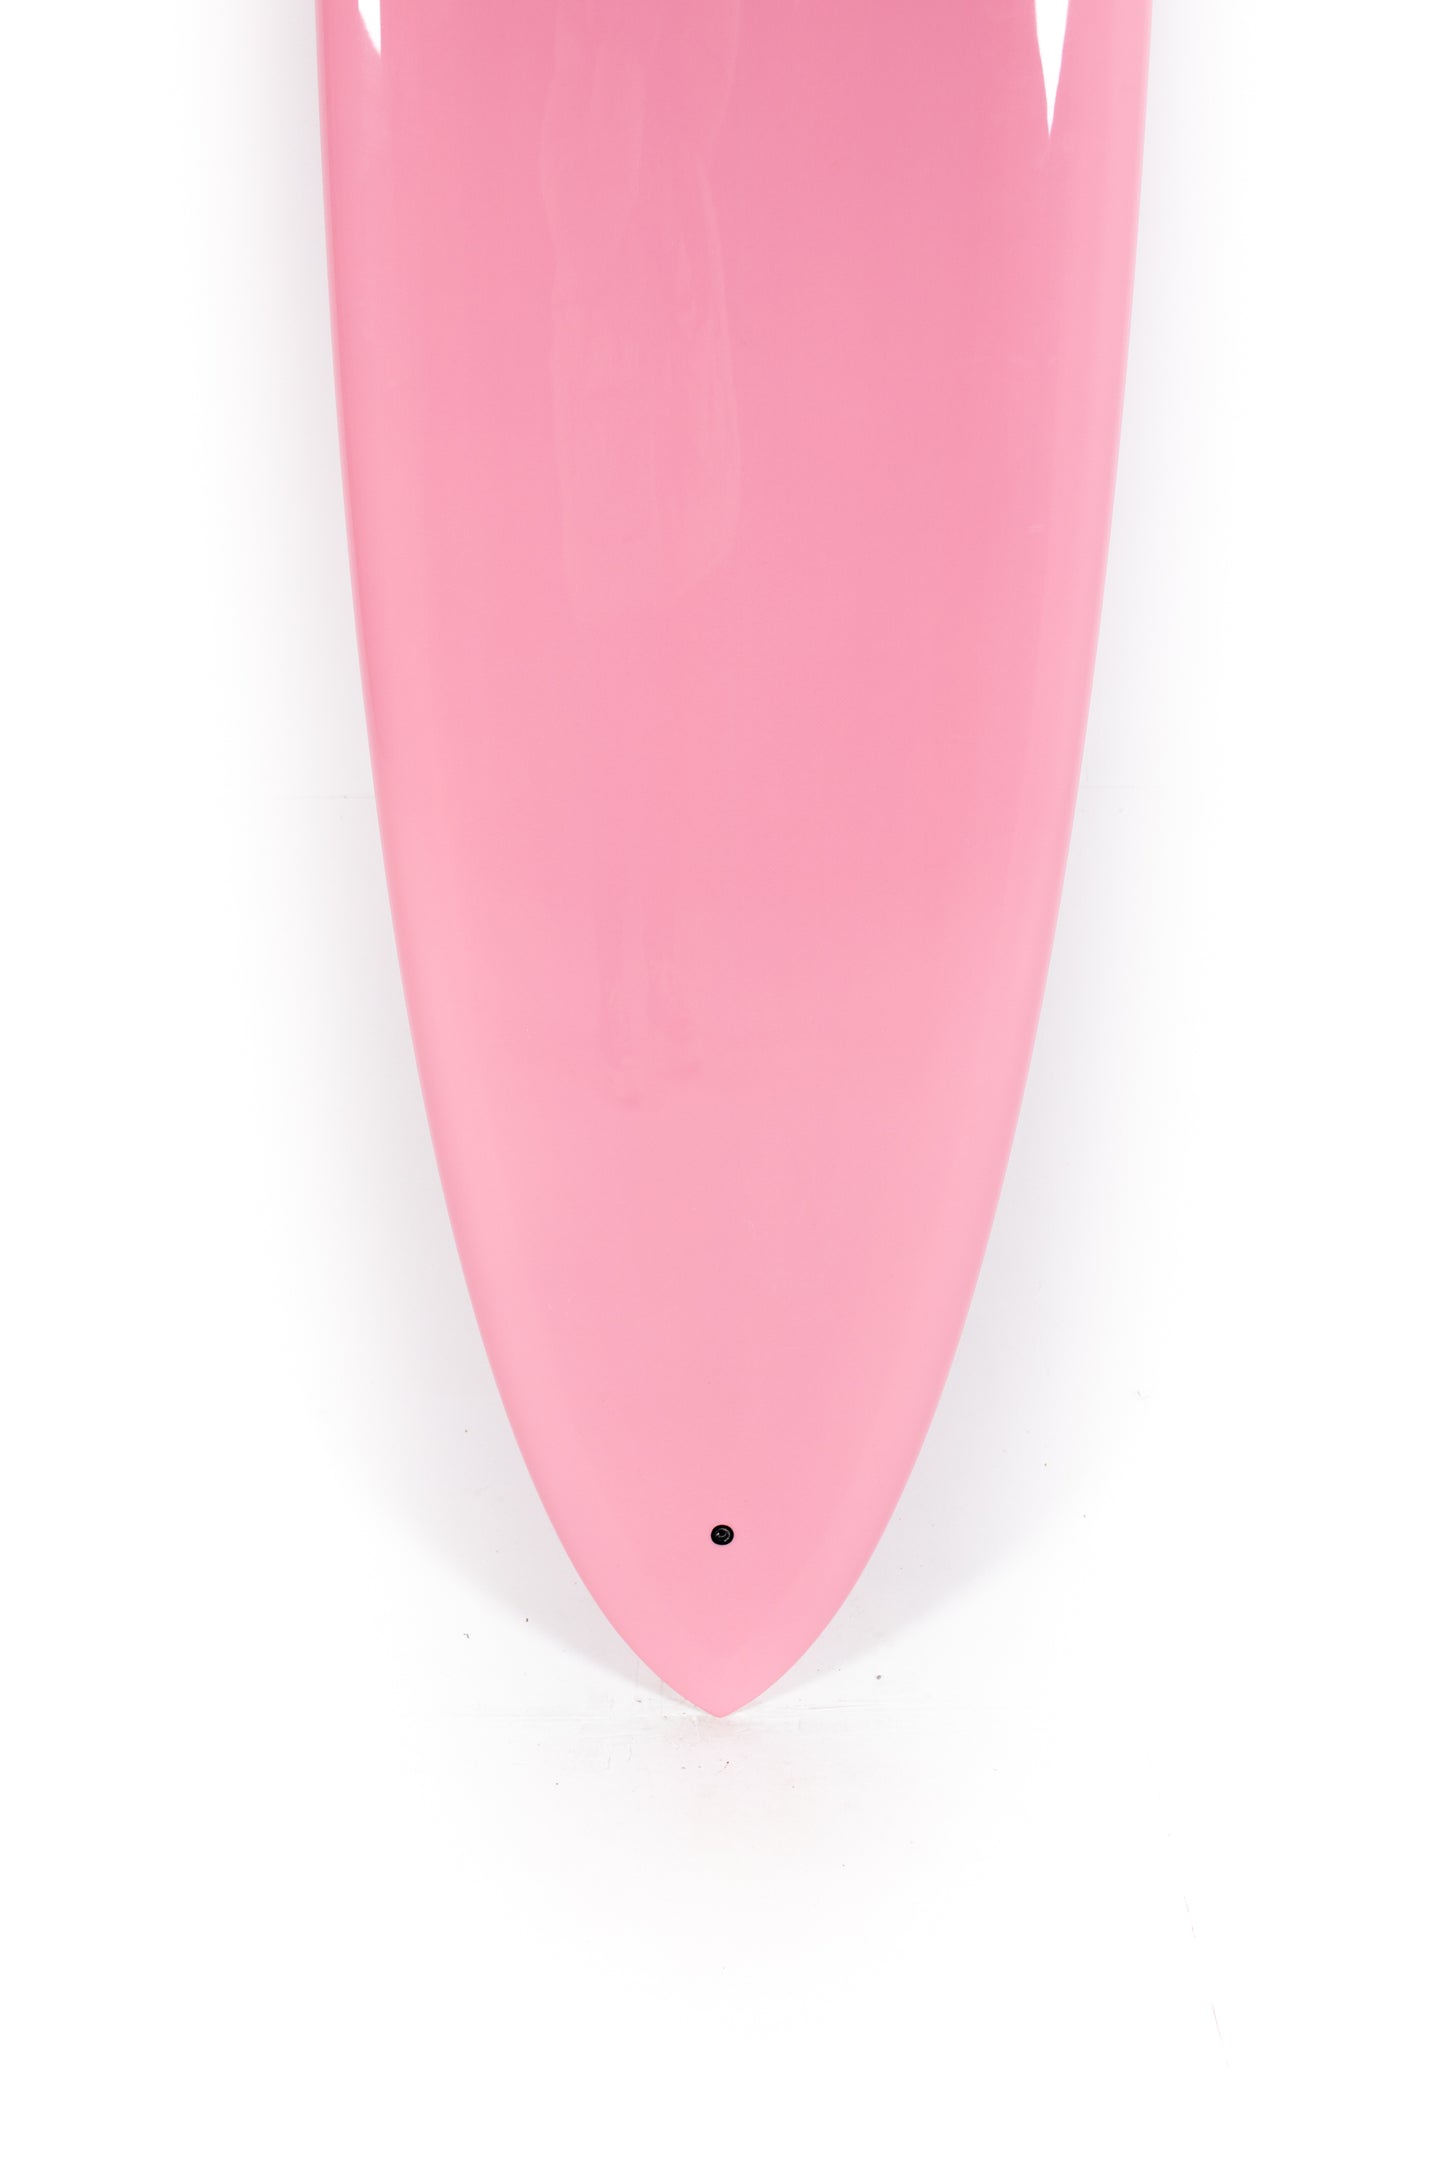 
                  
                    Pukas Surf Shop - Christenson Surfboards - C-BUCKET - 7'2" x 21 1/4 x 2 3/4 - CX05019
                  
                